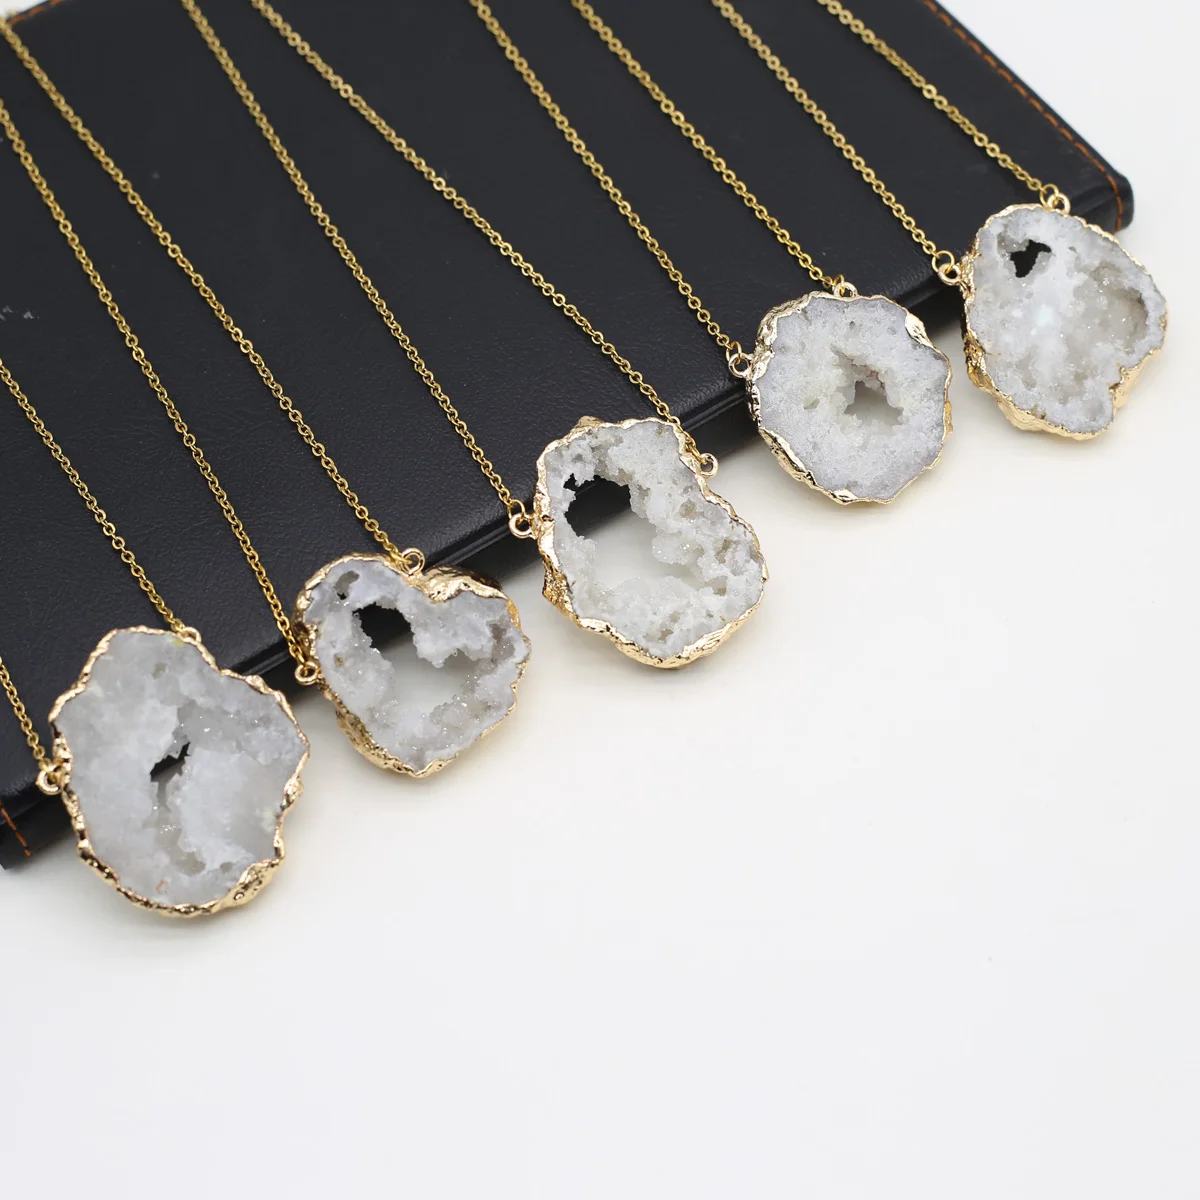 Купи Natural Crystal Raw Stone Agate Gold Plated Irregular Pendant Necklace Metal Chain Charm Bracelet Jewelry Gift Women Men за 181 рублей в магазине AliExpress